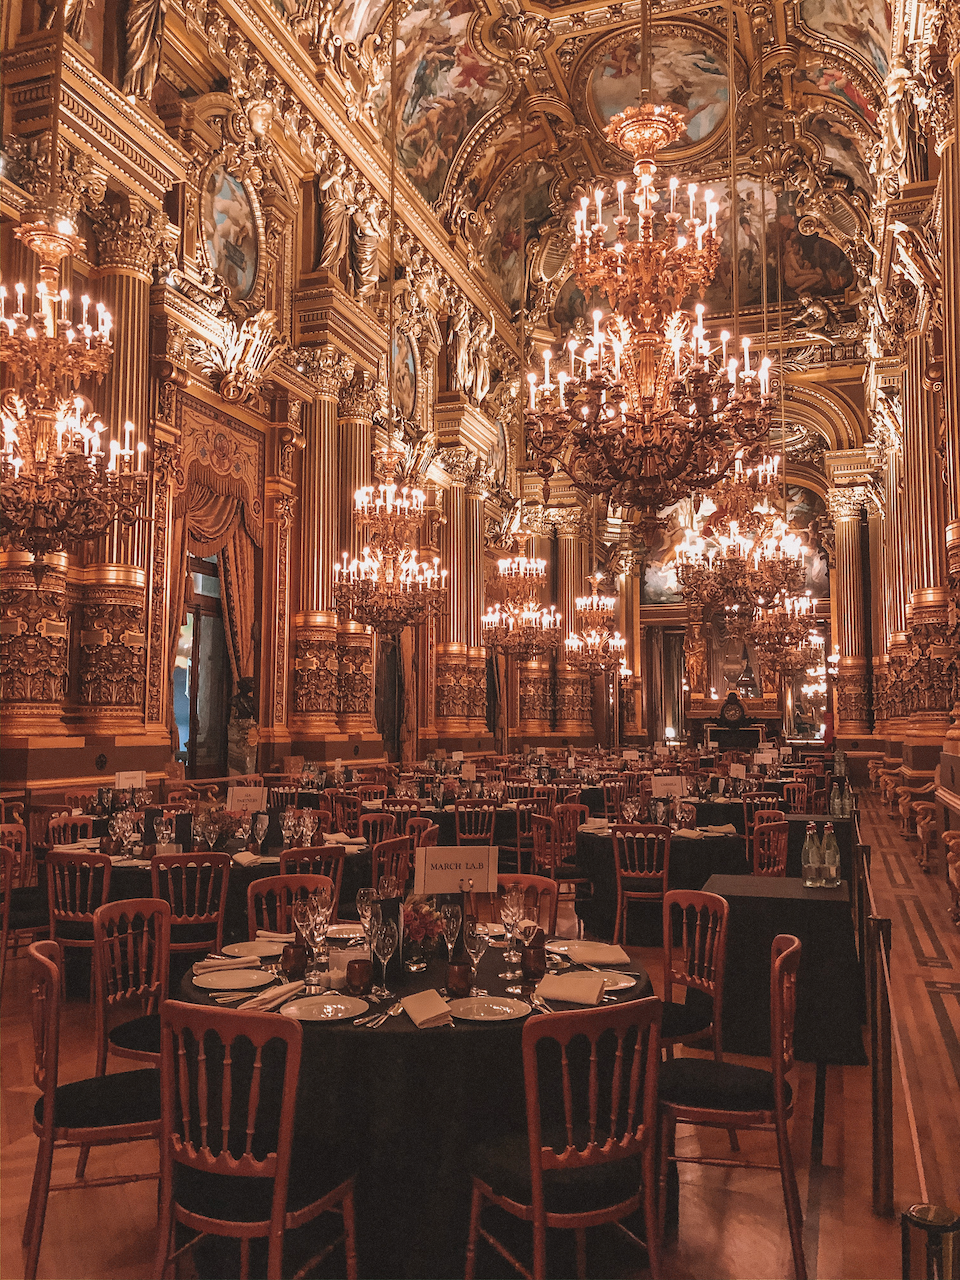 The dining hall of Palais Garnier - Paris - France